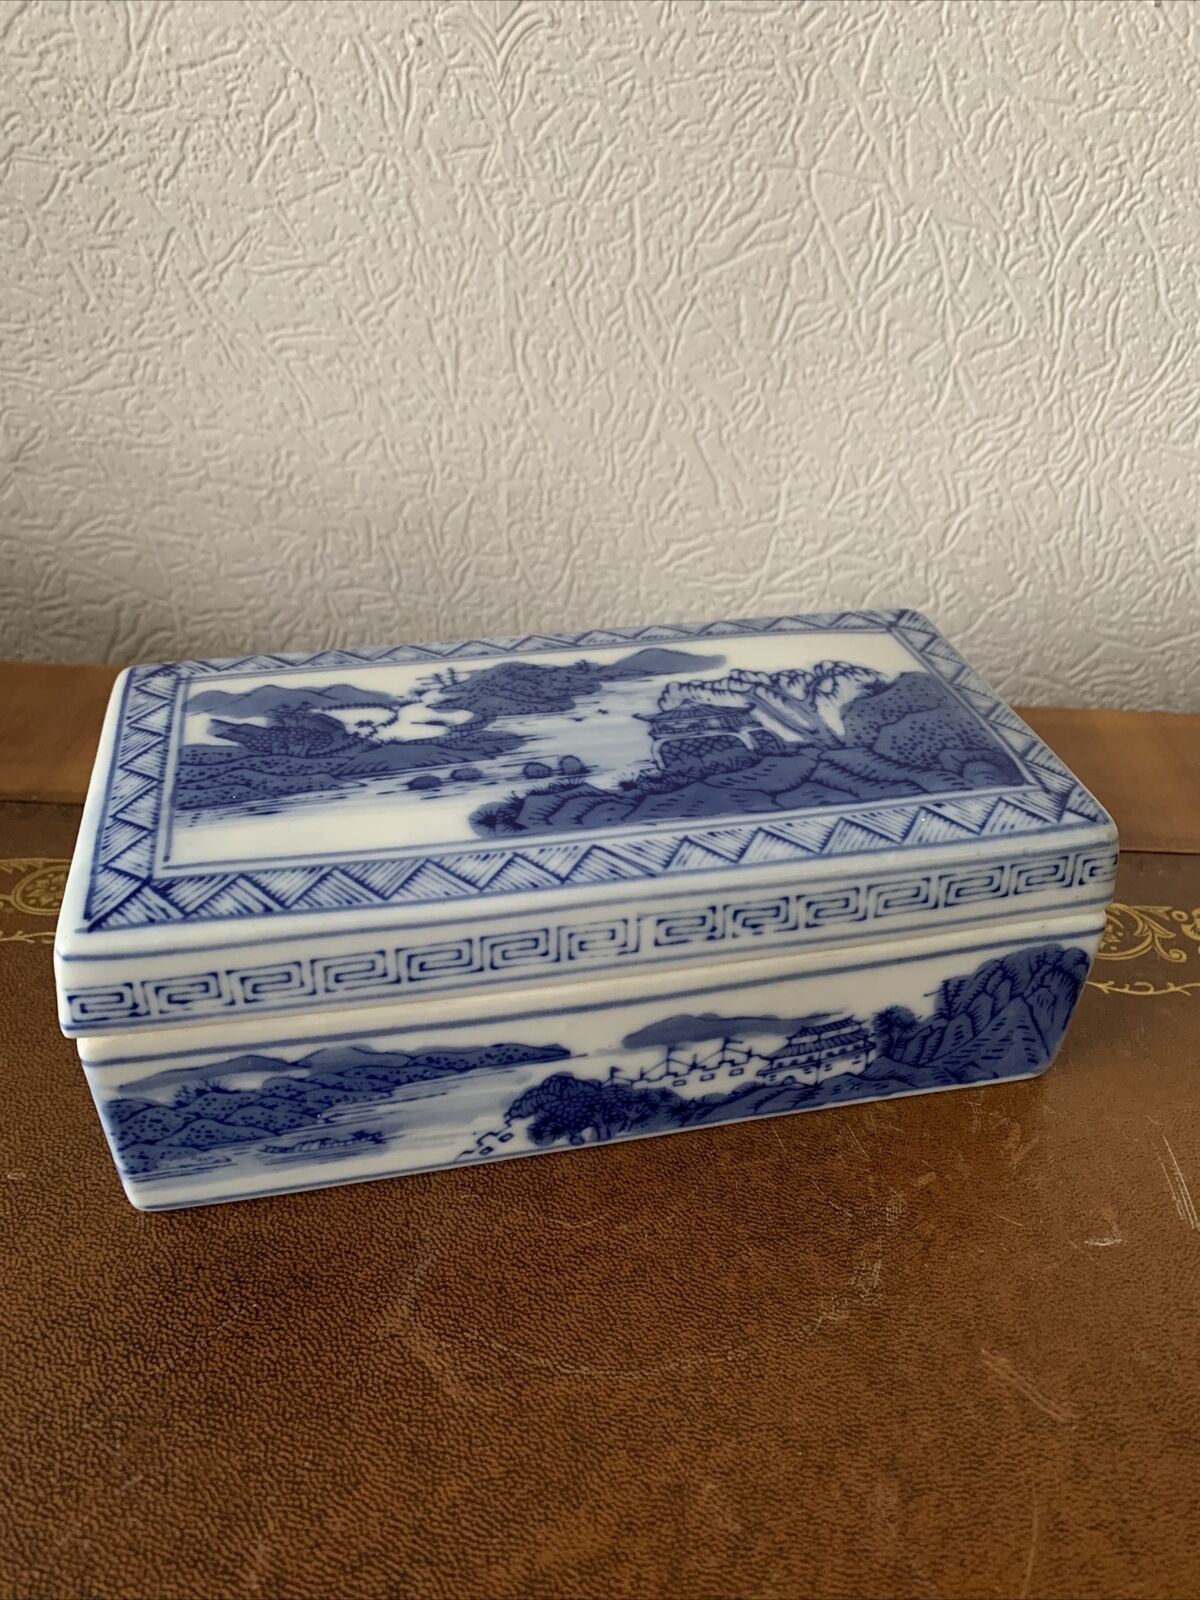 Antique Valuations: Antique Chinese Porcelain Qianlong Mark Blue White Landscape Covered Box